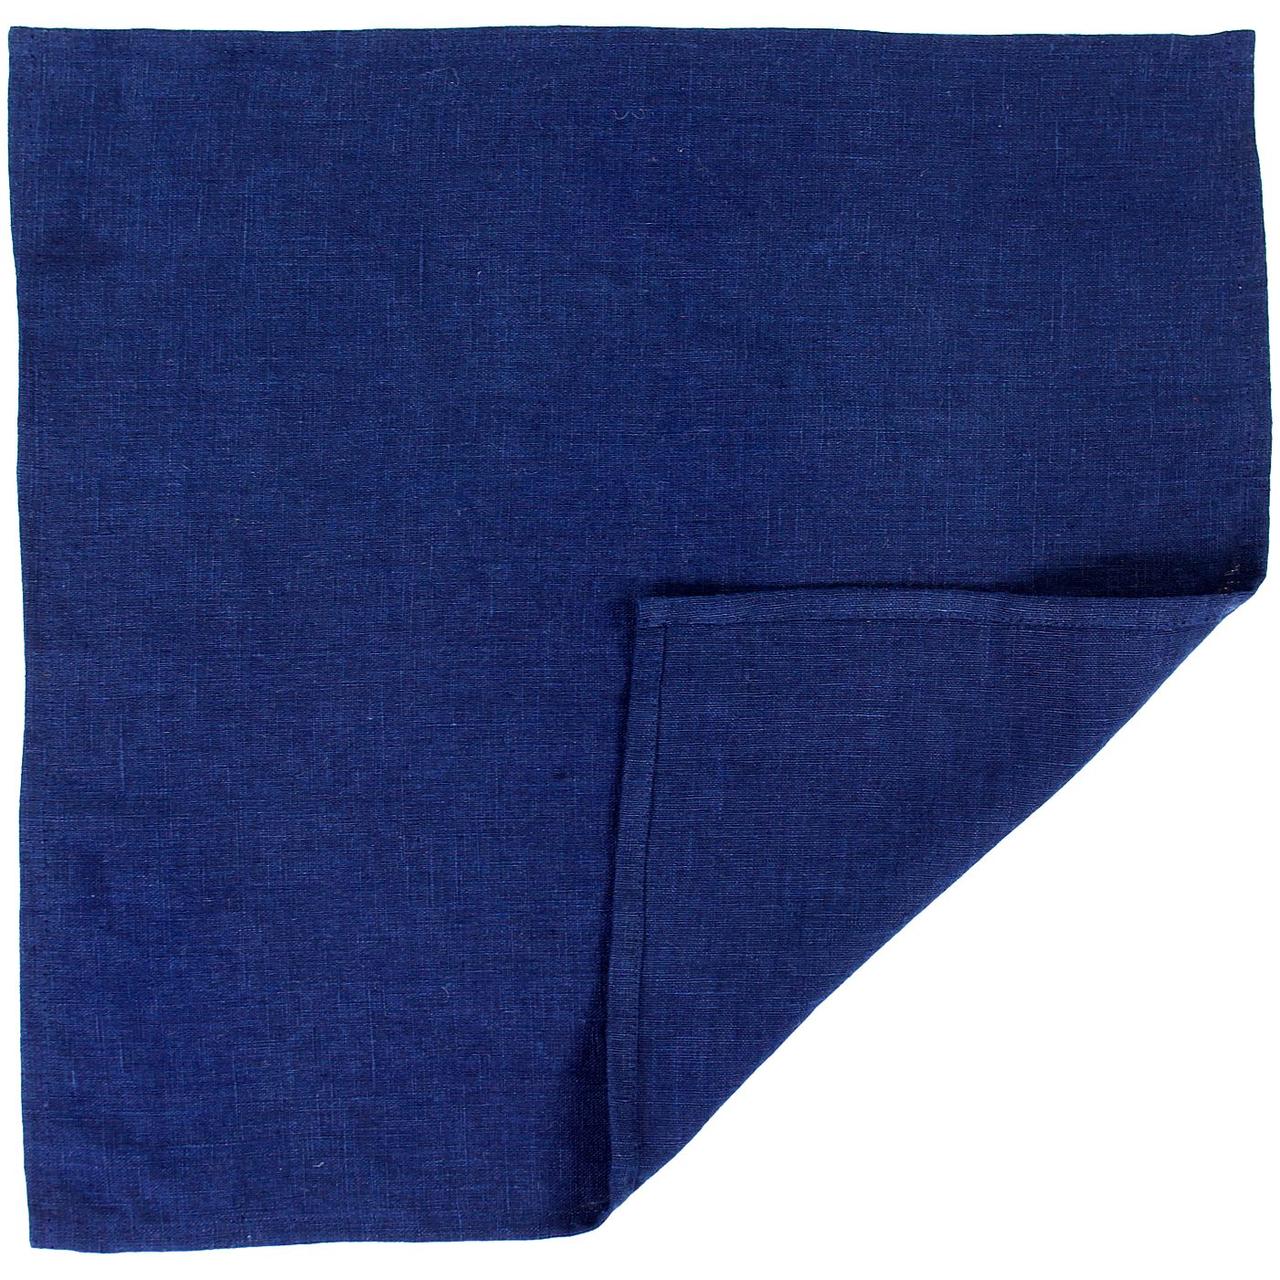 Сервировочная салфетка Essential, односторонняя, темно-синяя (артикул 10649.40), фото 1